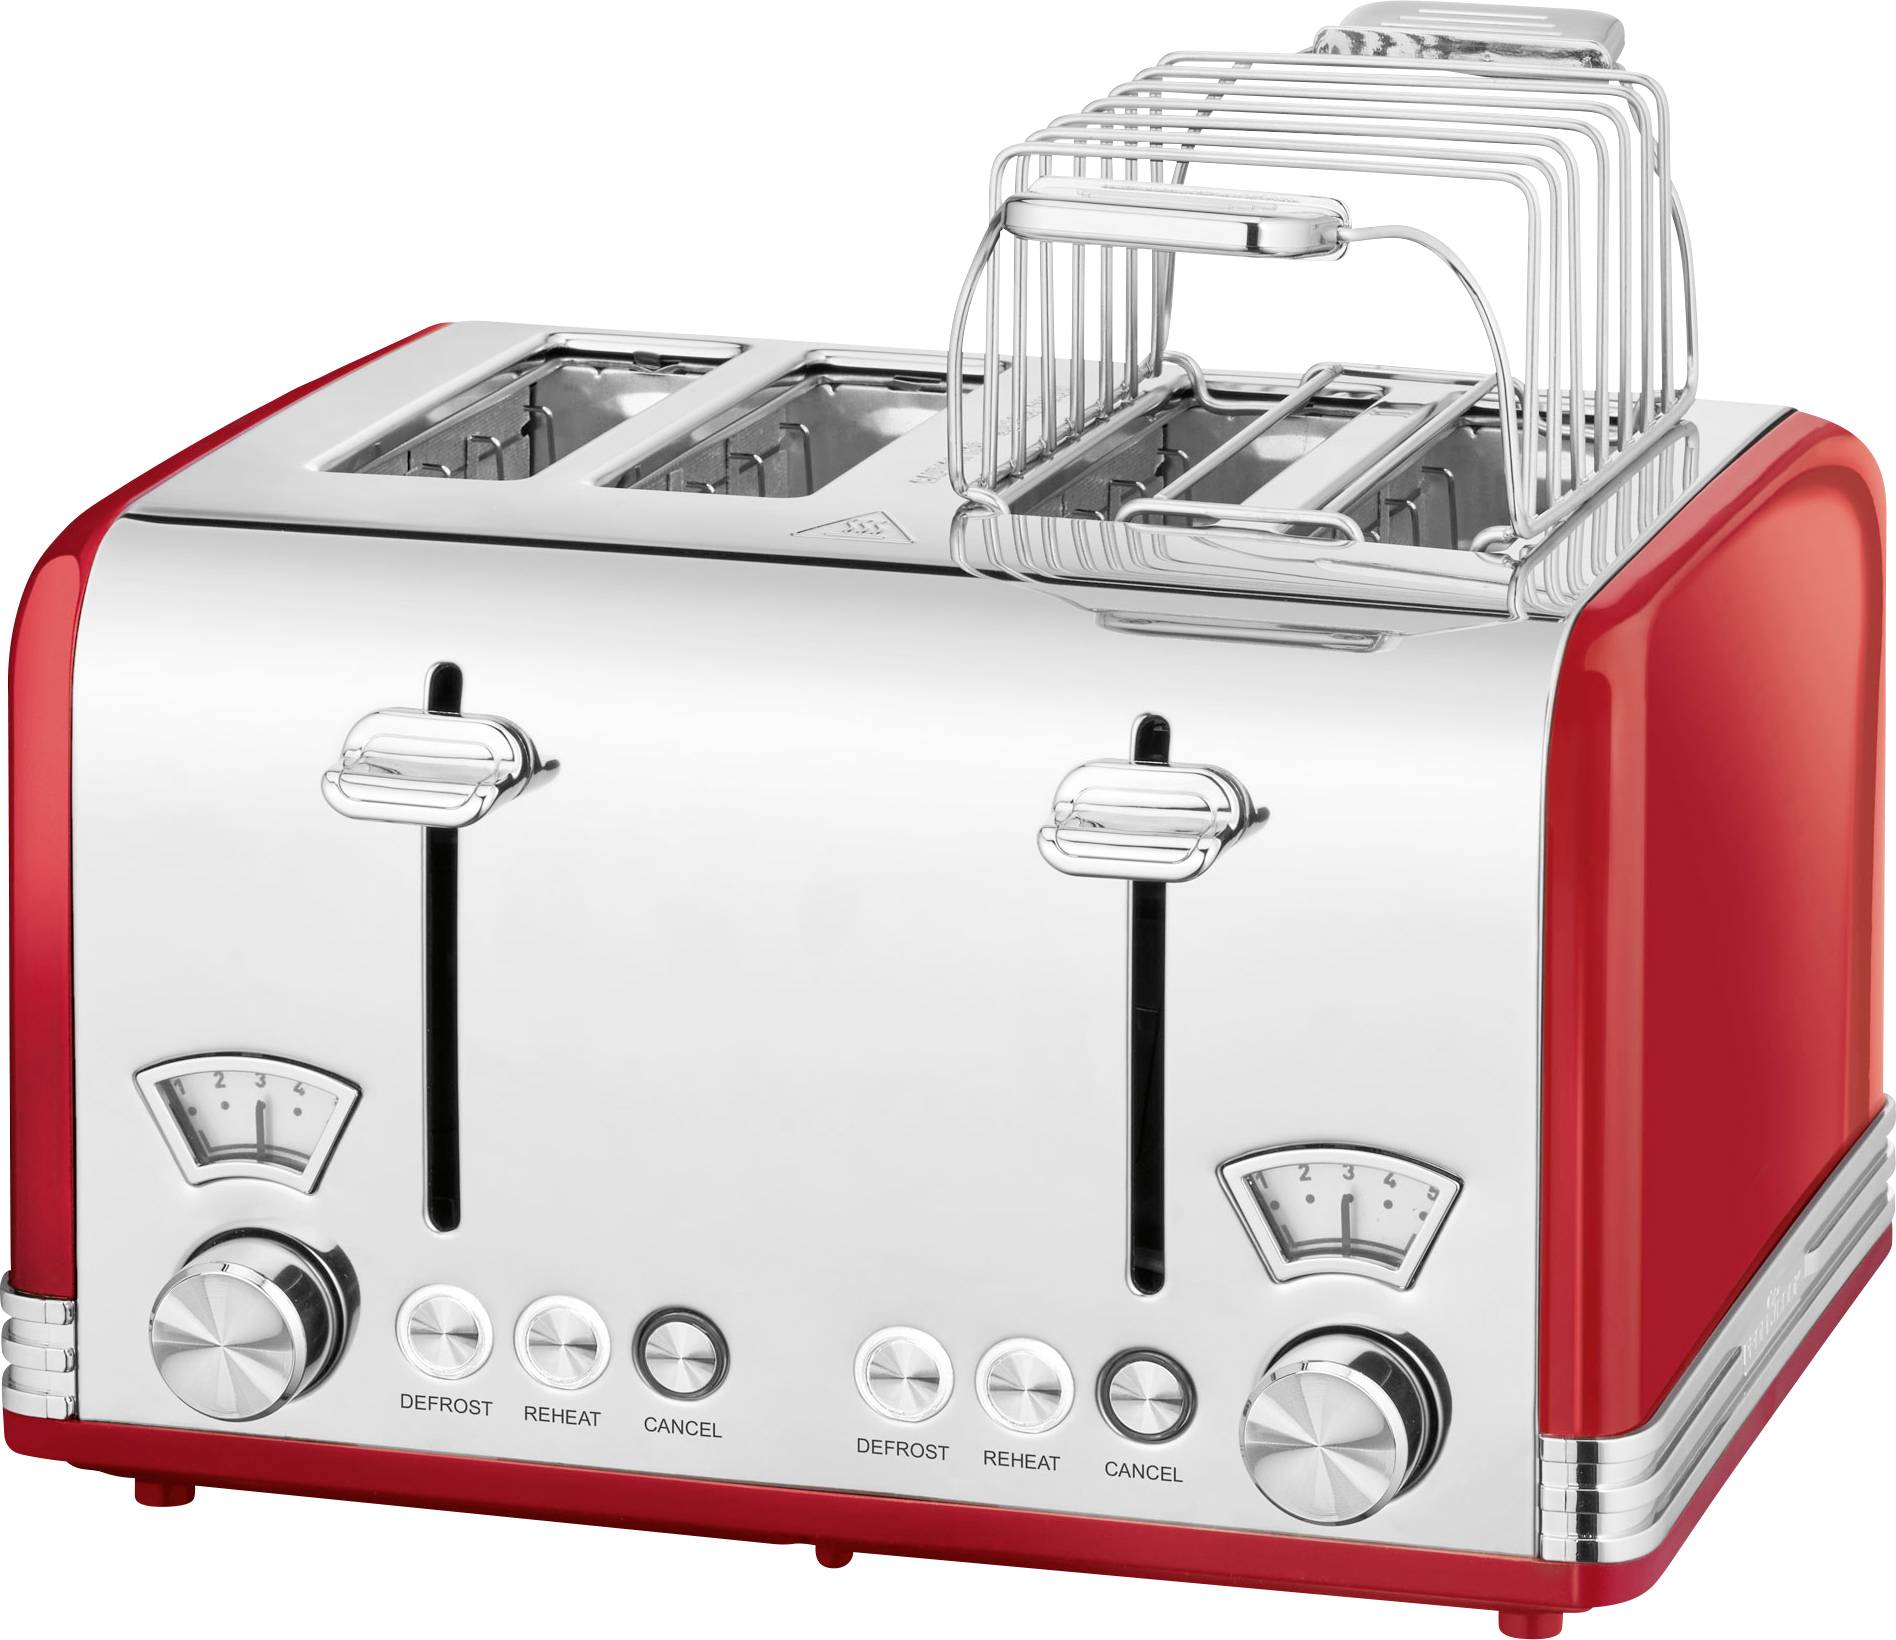 CLATRONIC Profi Cook PC-TA 1194 ro Toaster Rot